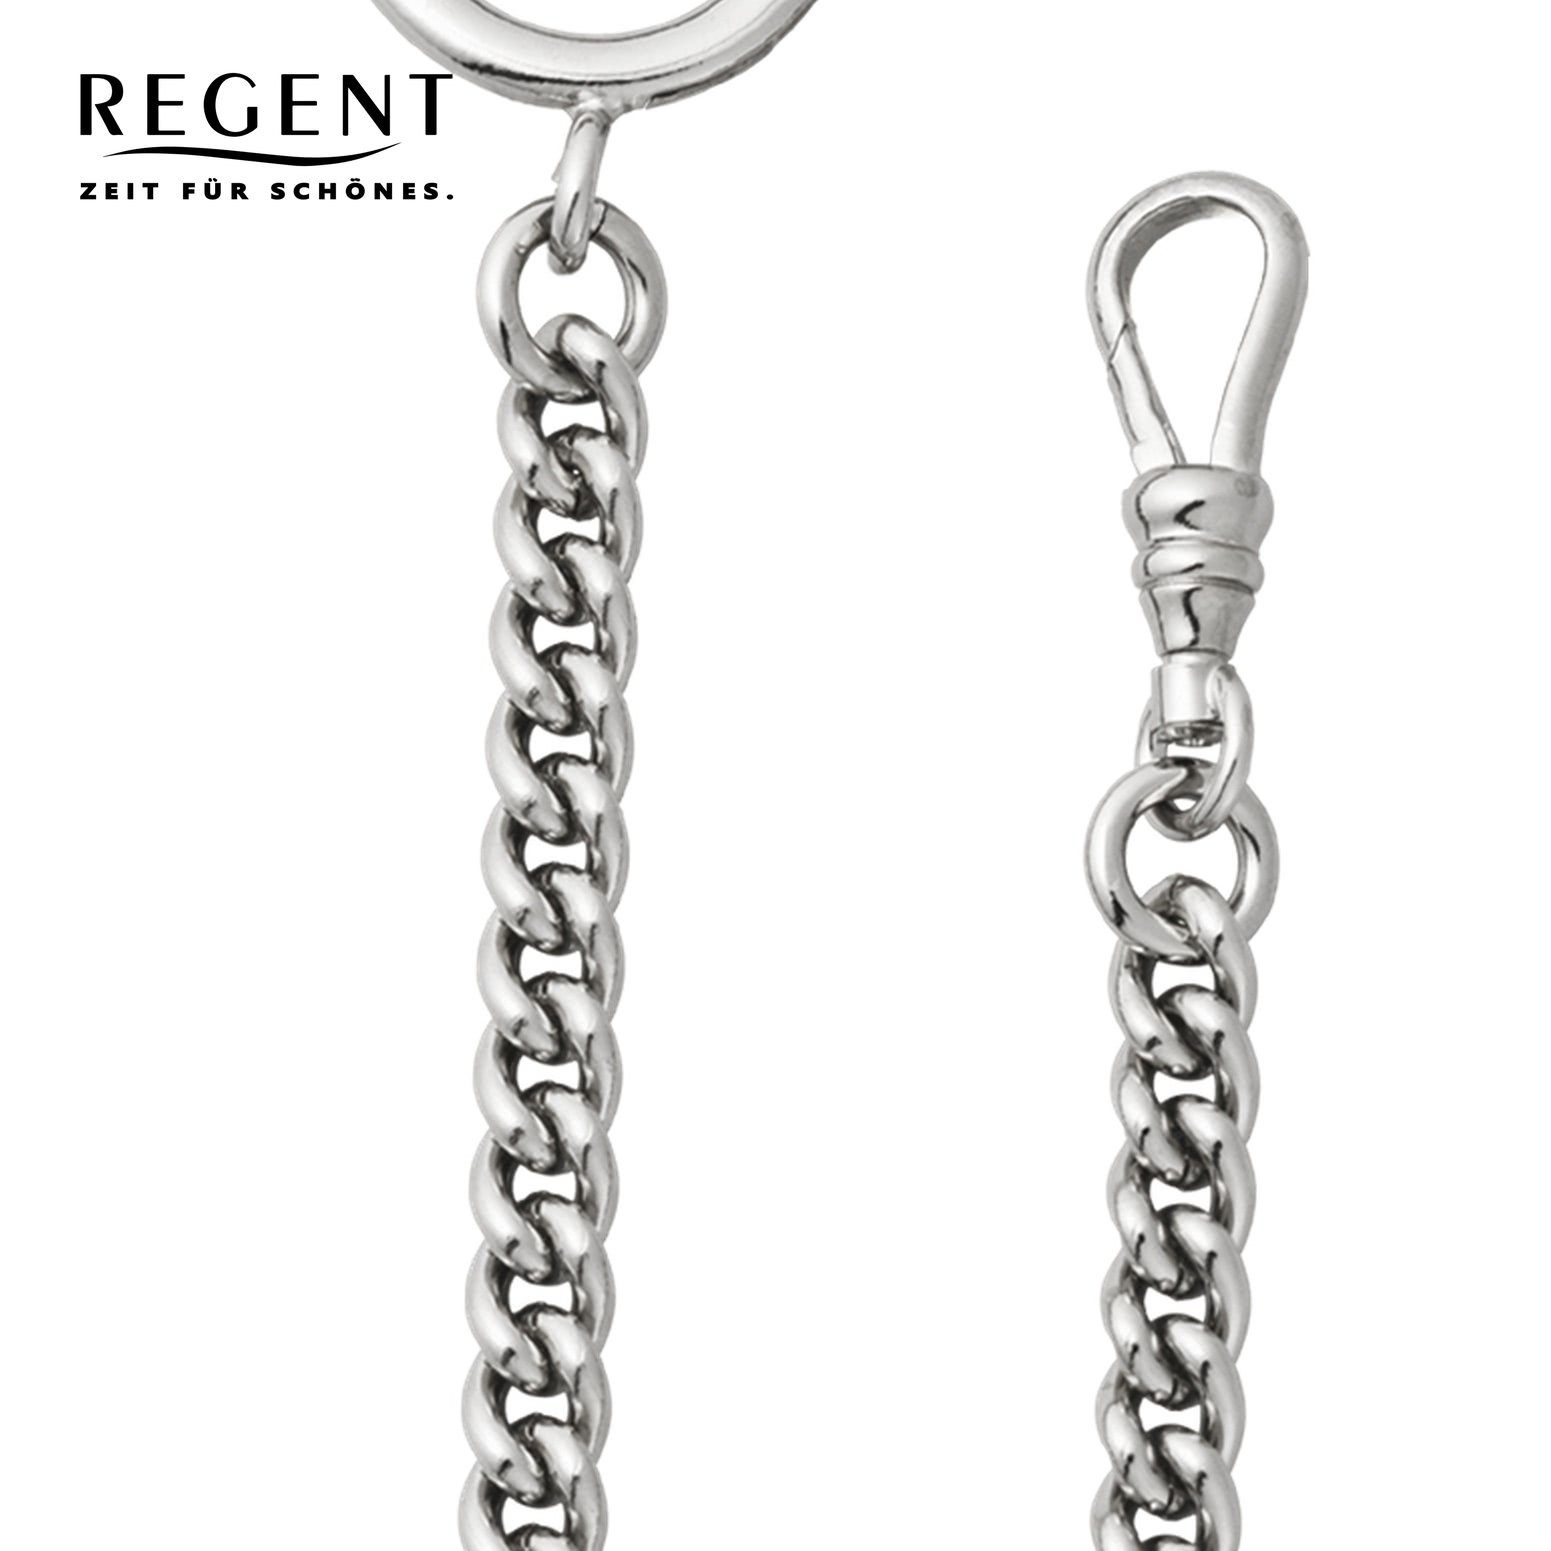 Elegant Regent Herren Taschenuhren-Kette Regent Taschenuhrenkette, Kettenuhr P-47, 5mm